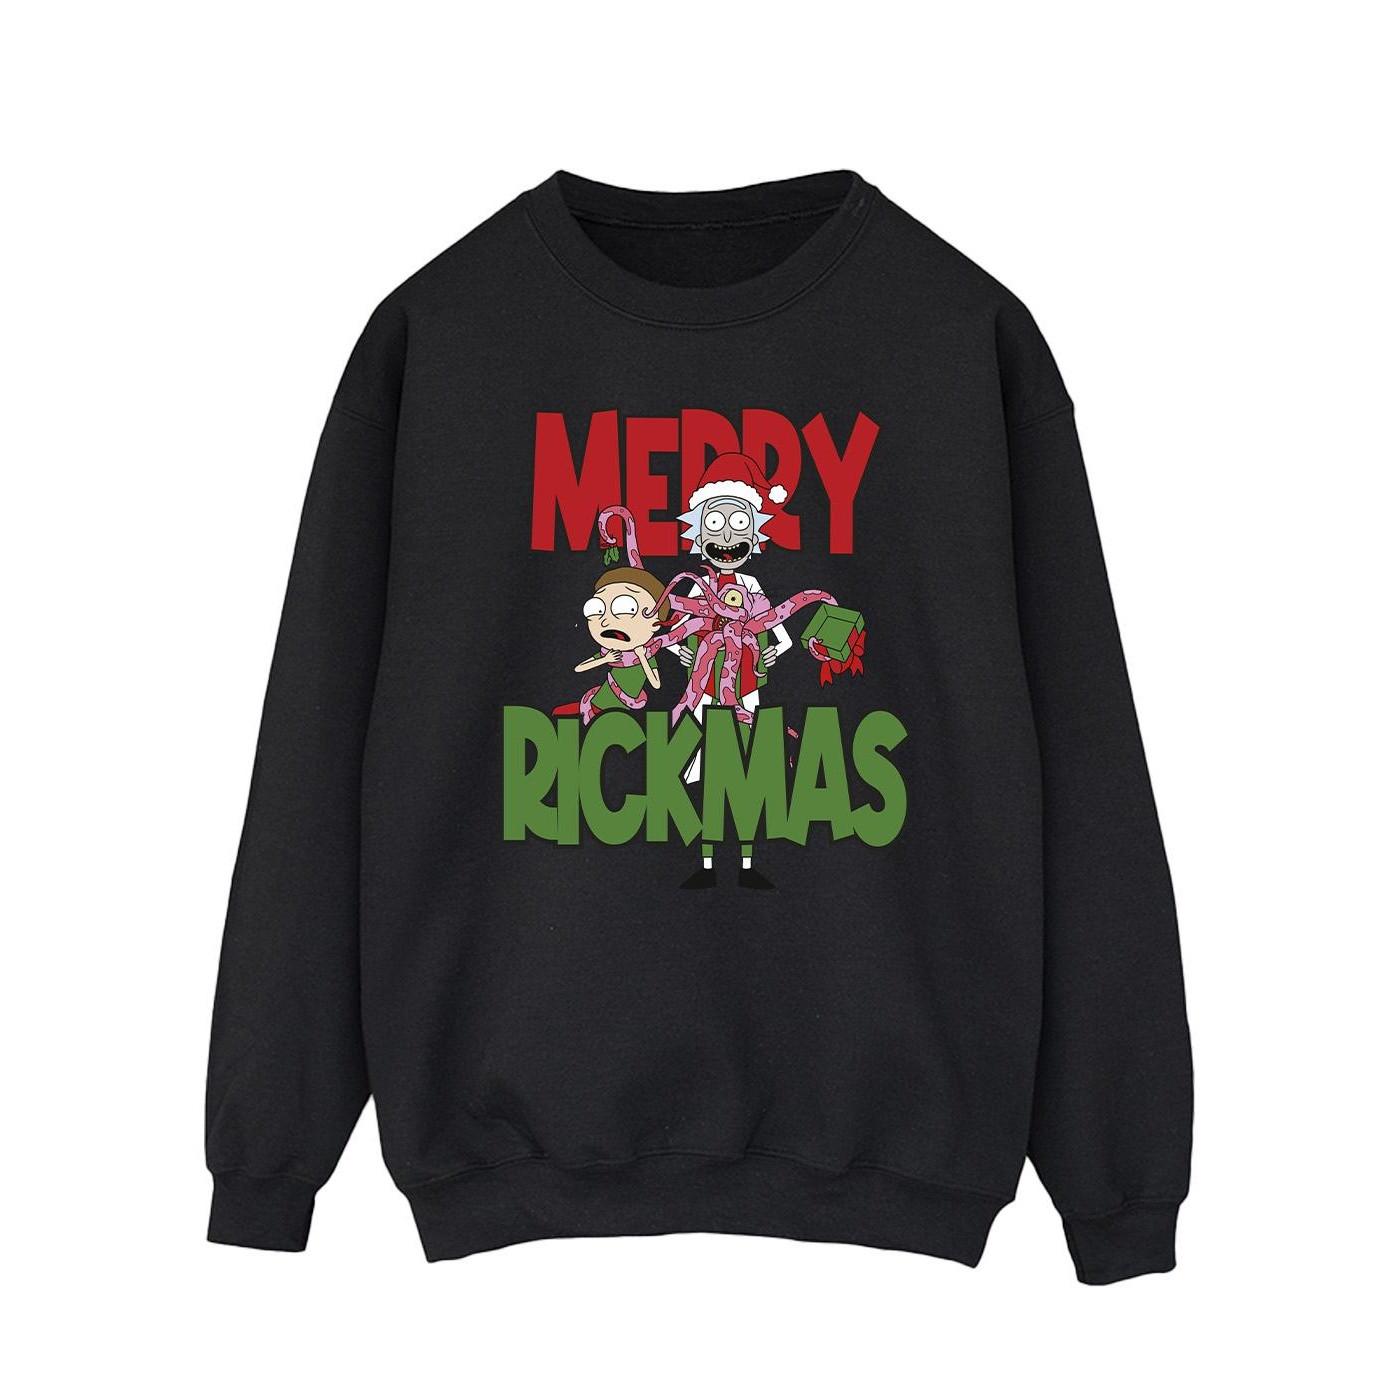 Merry Rickmas Sweatshirt Herren Schwarz XL von Rick And Morty